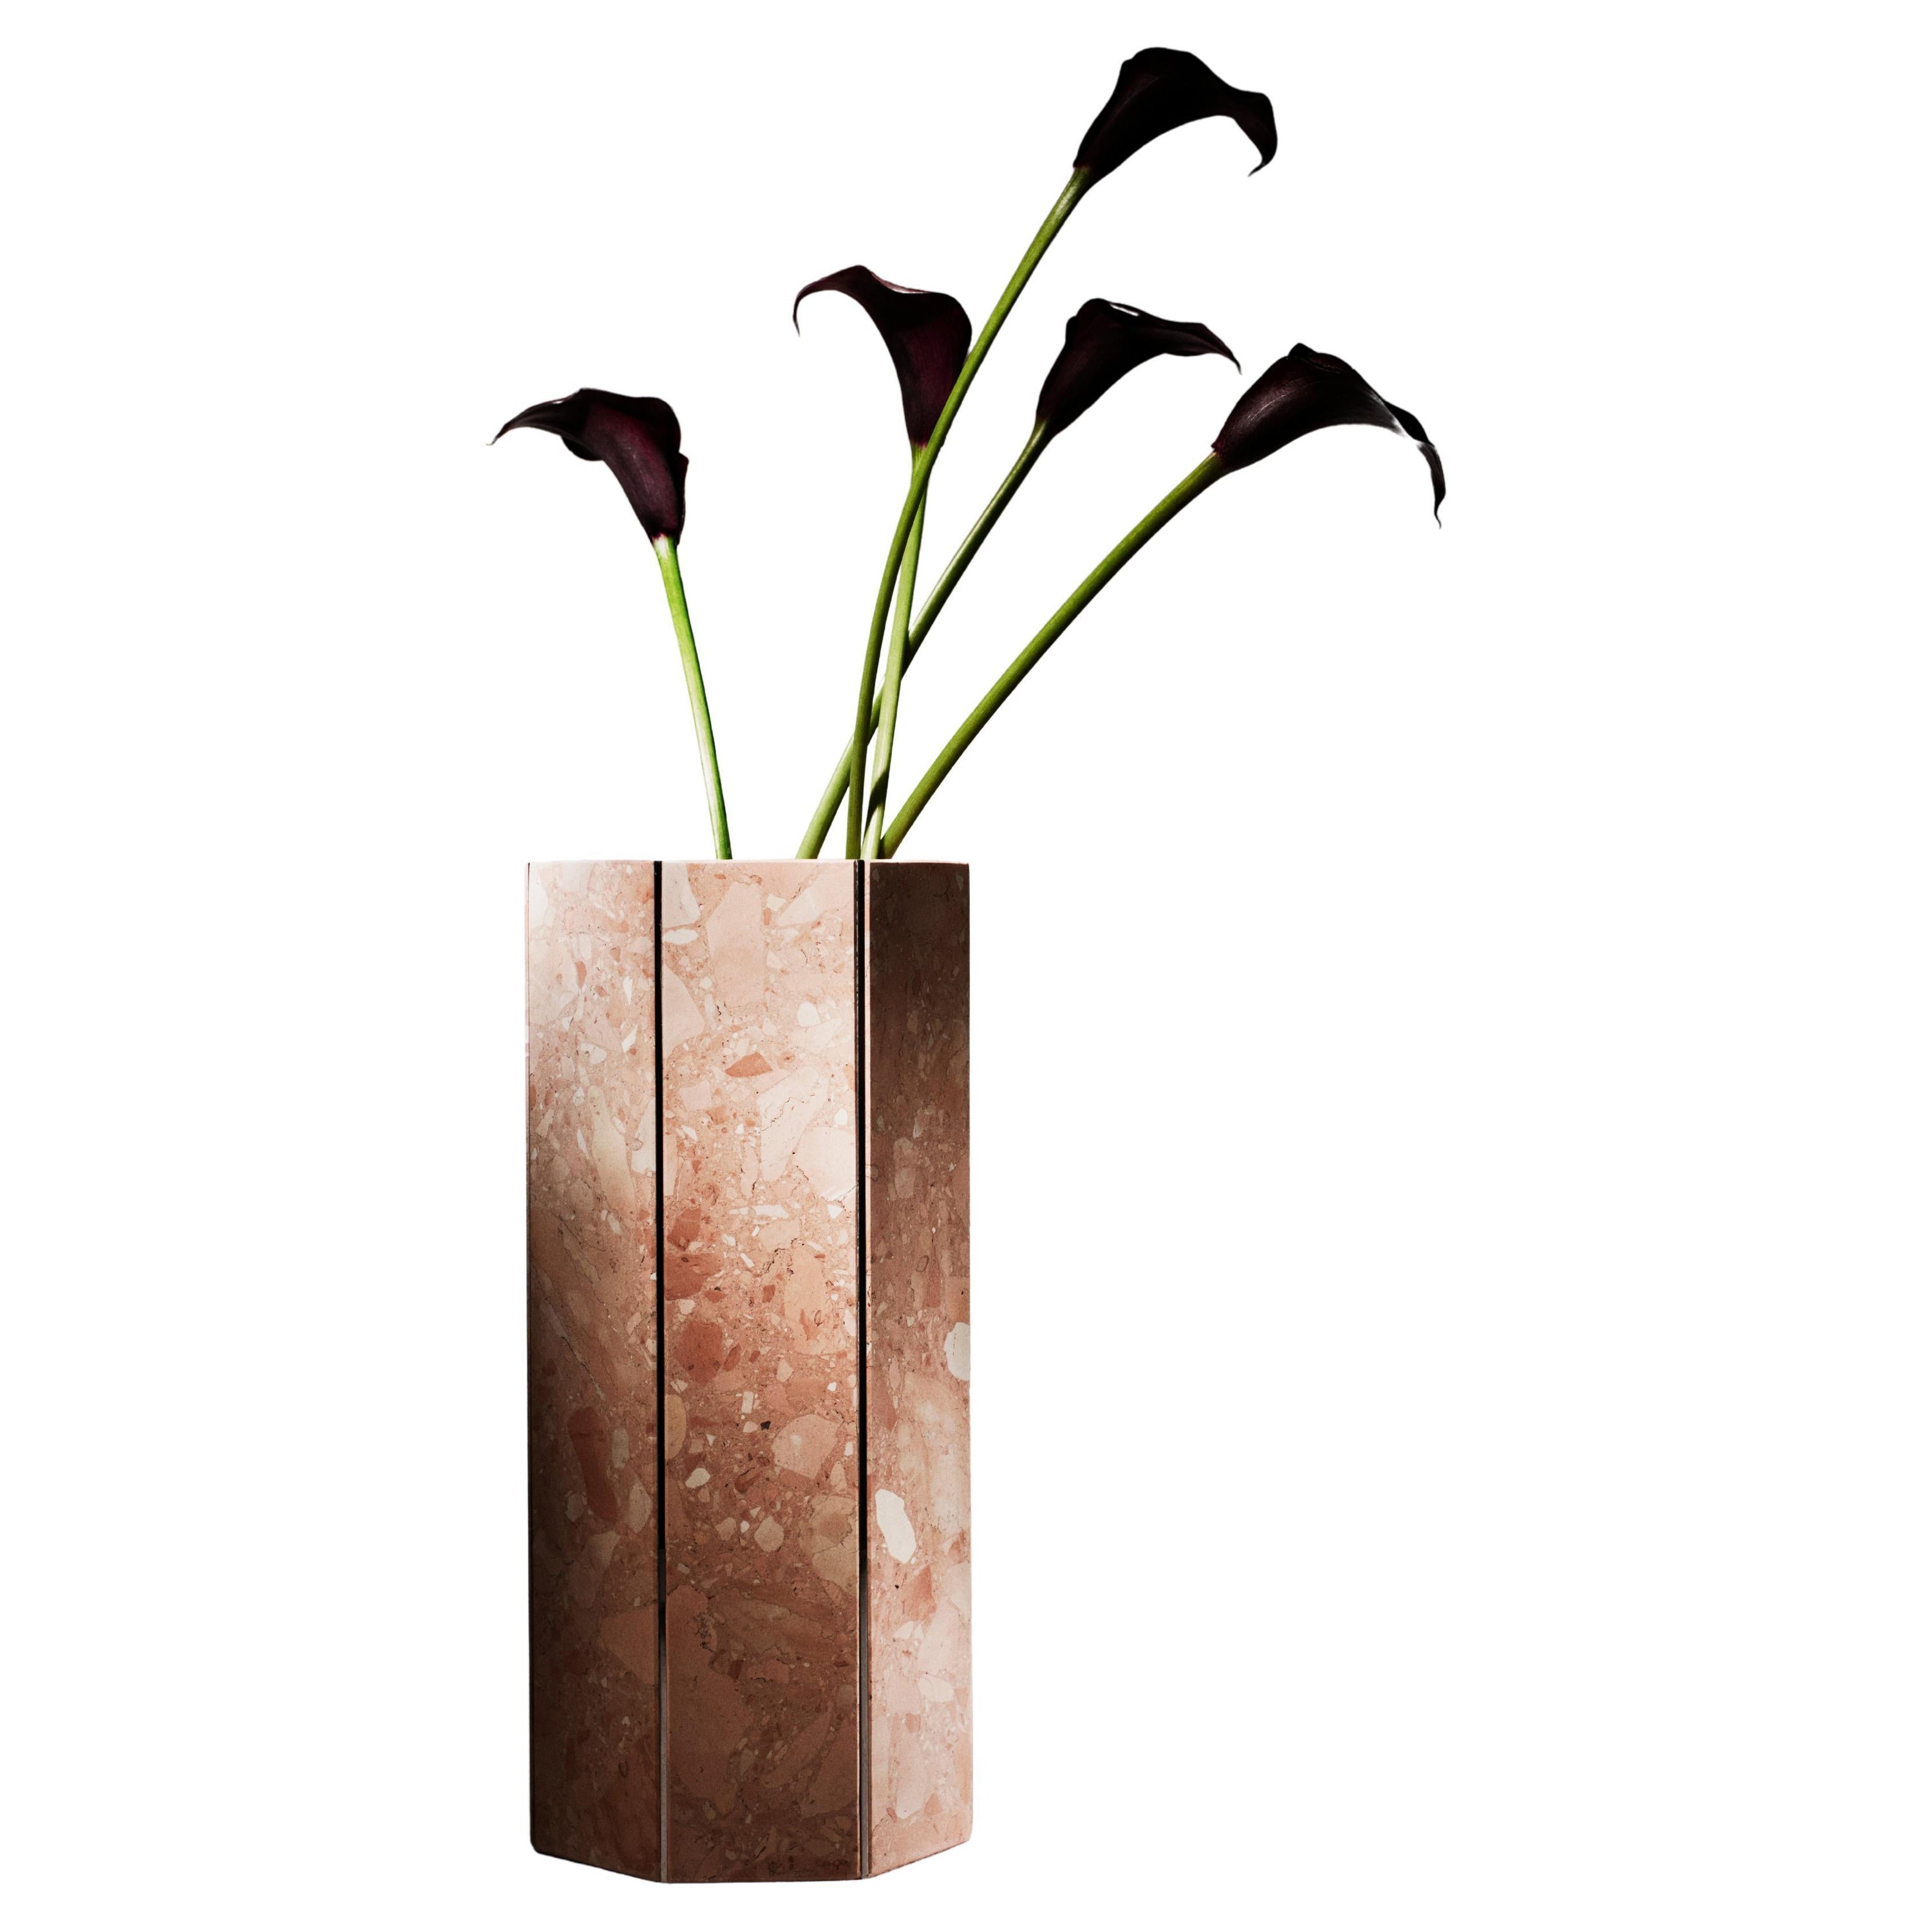 Rosa Perlino Heptagonal Narzissen-Vase von Tino Seubert, 2017